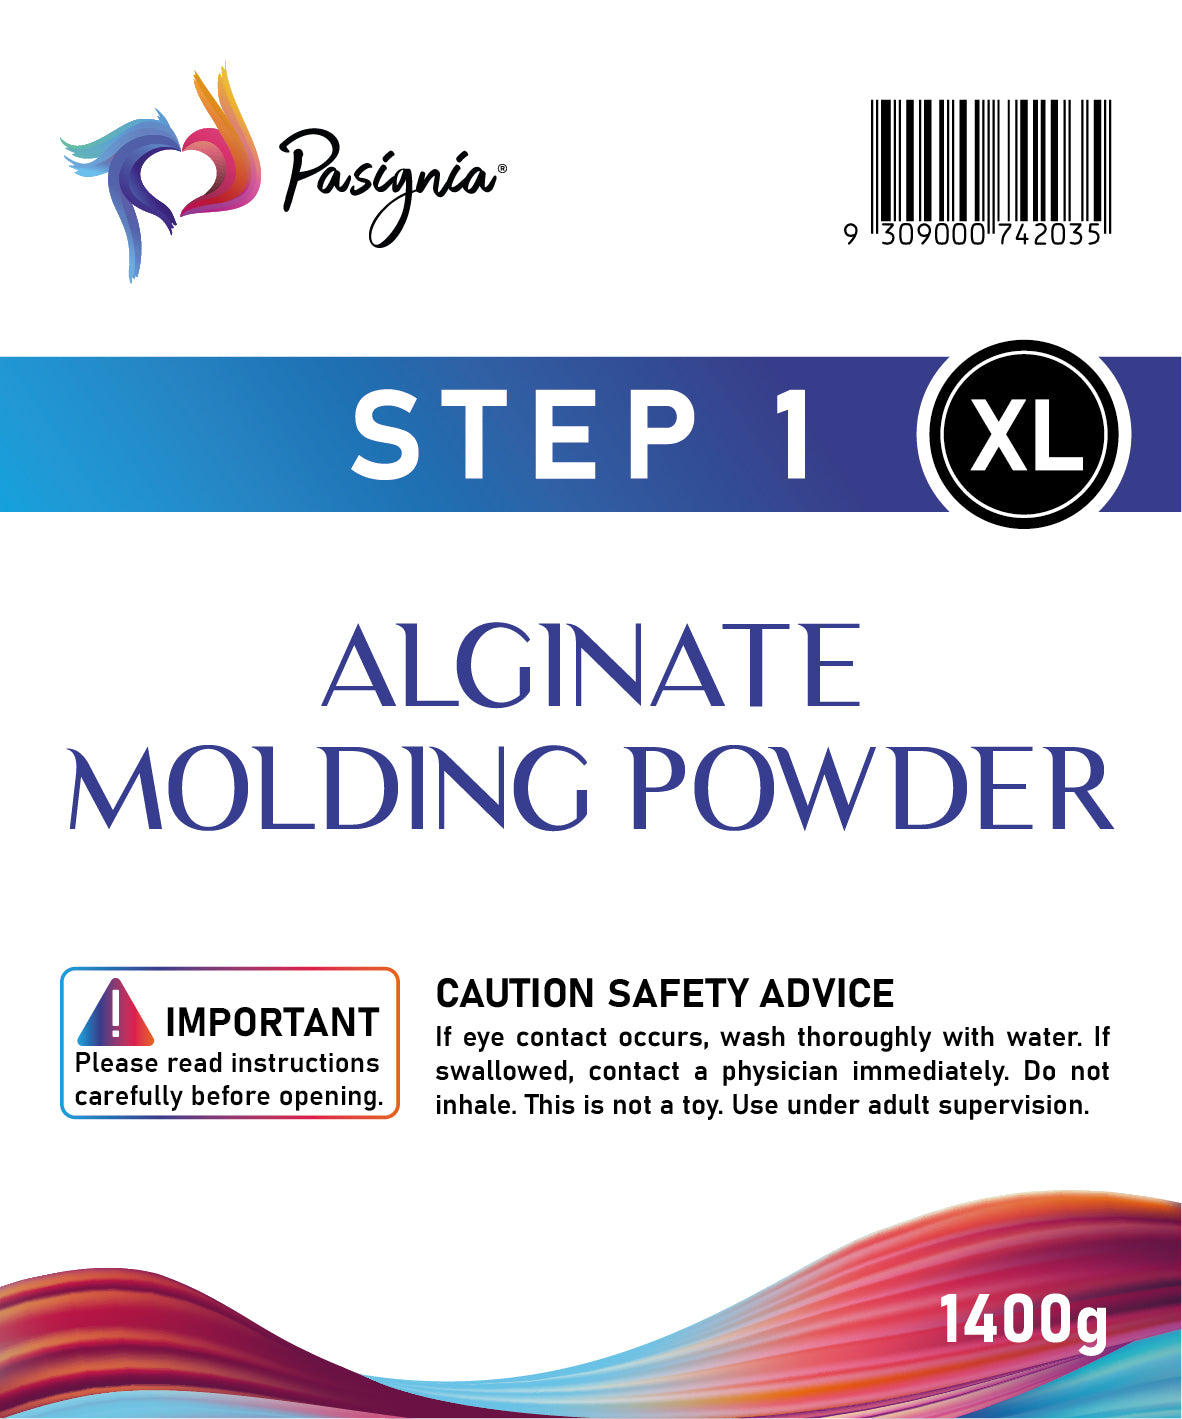 LifeMold Alginate Molding Powder - Non-Toxic Hand Guinea